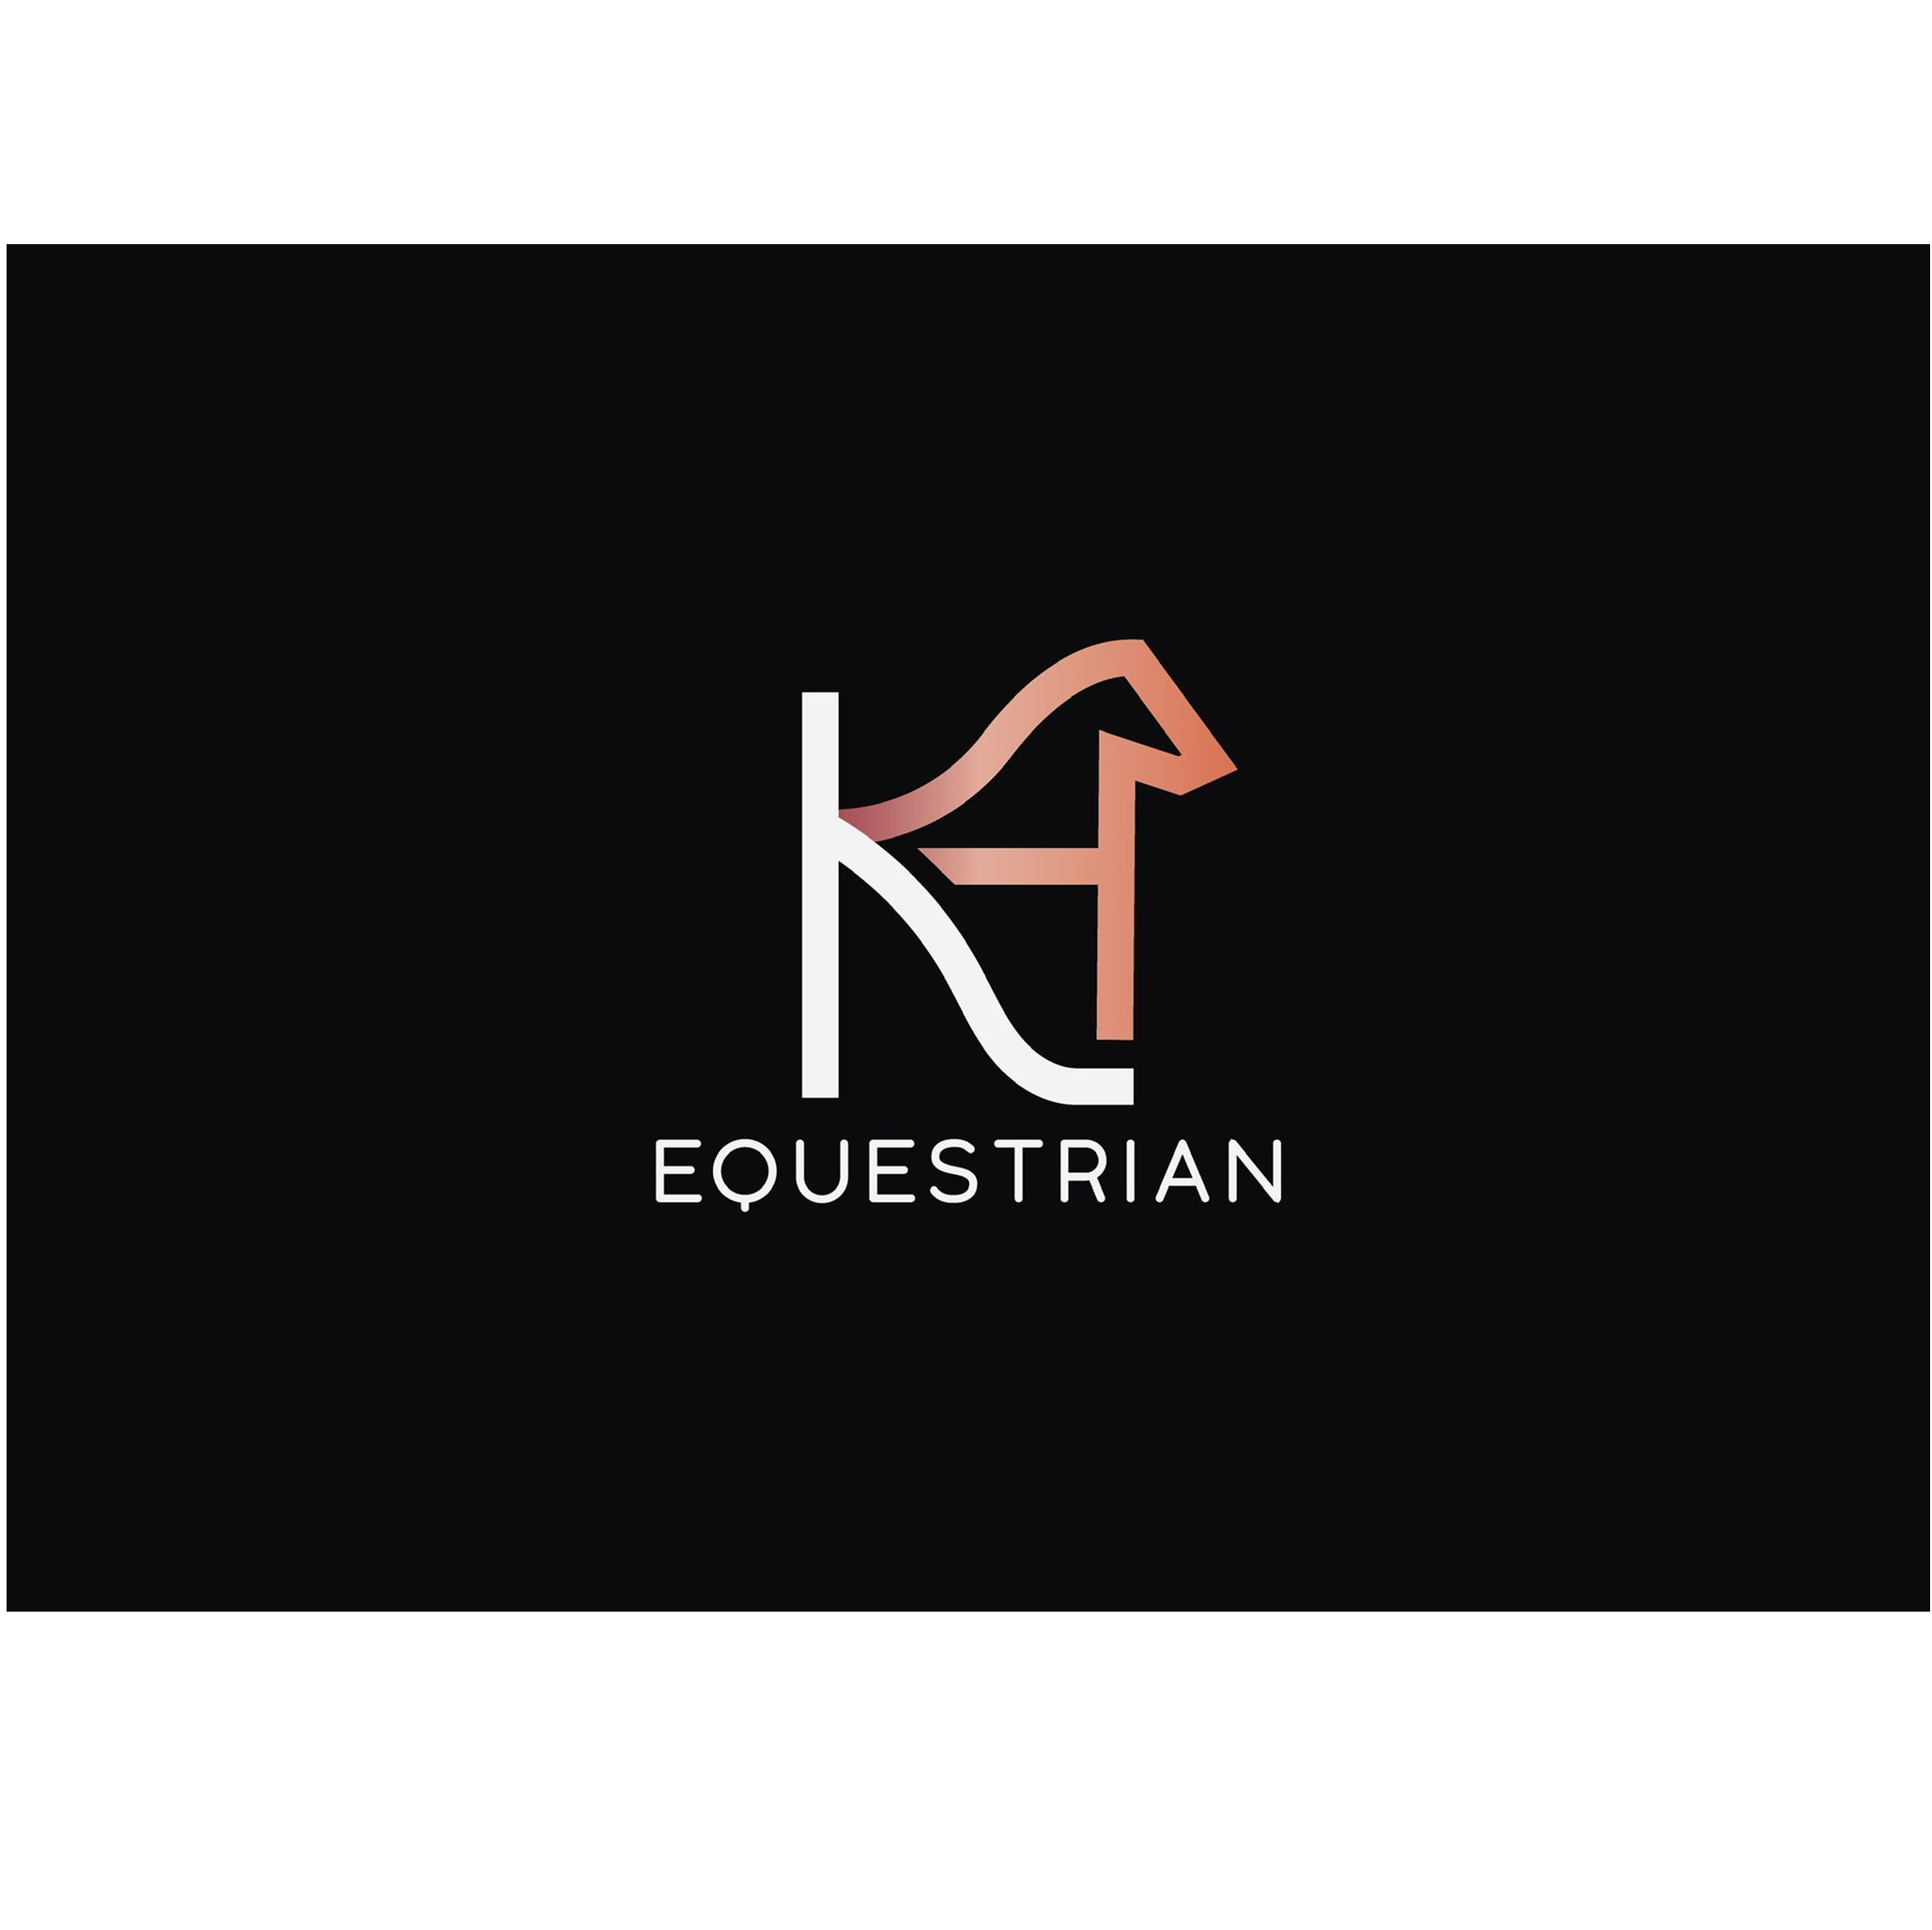 KH Equestrian 